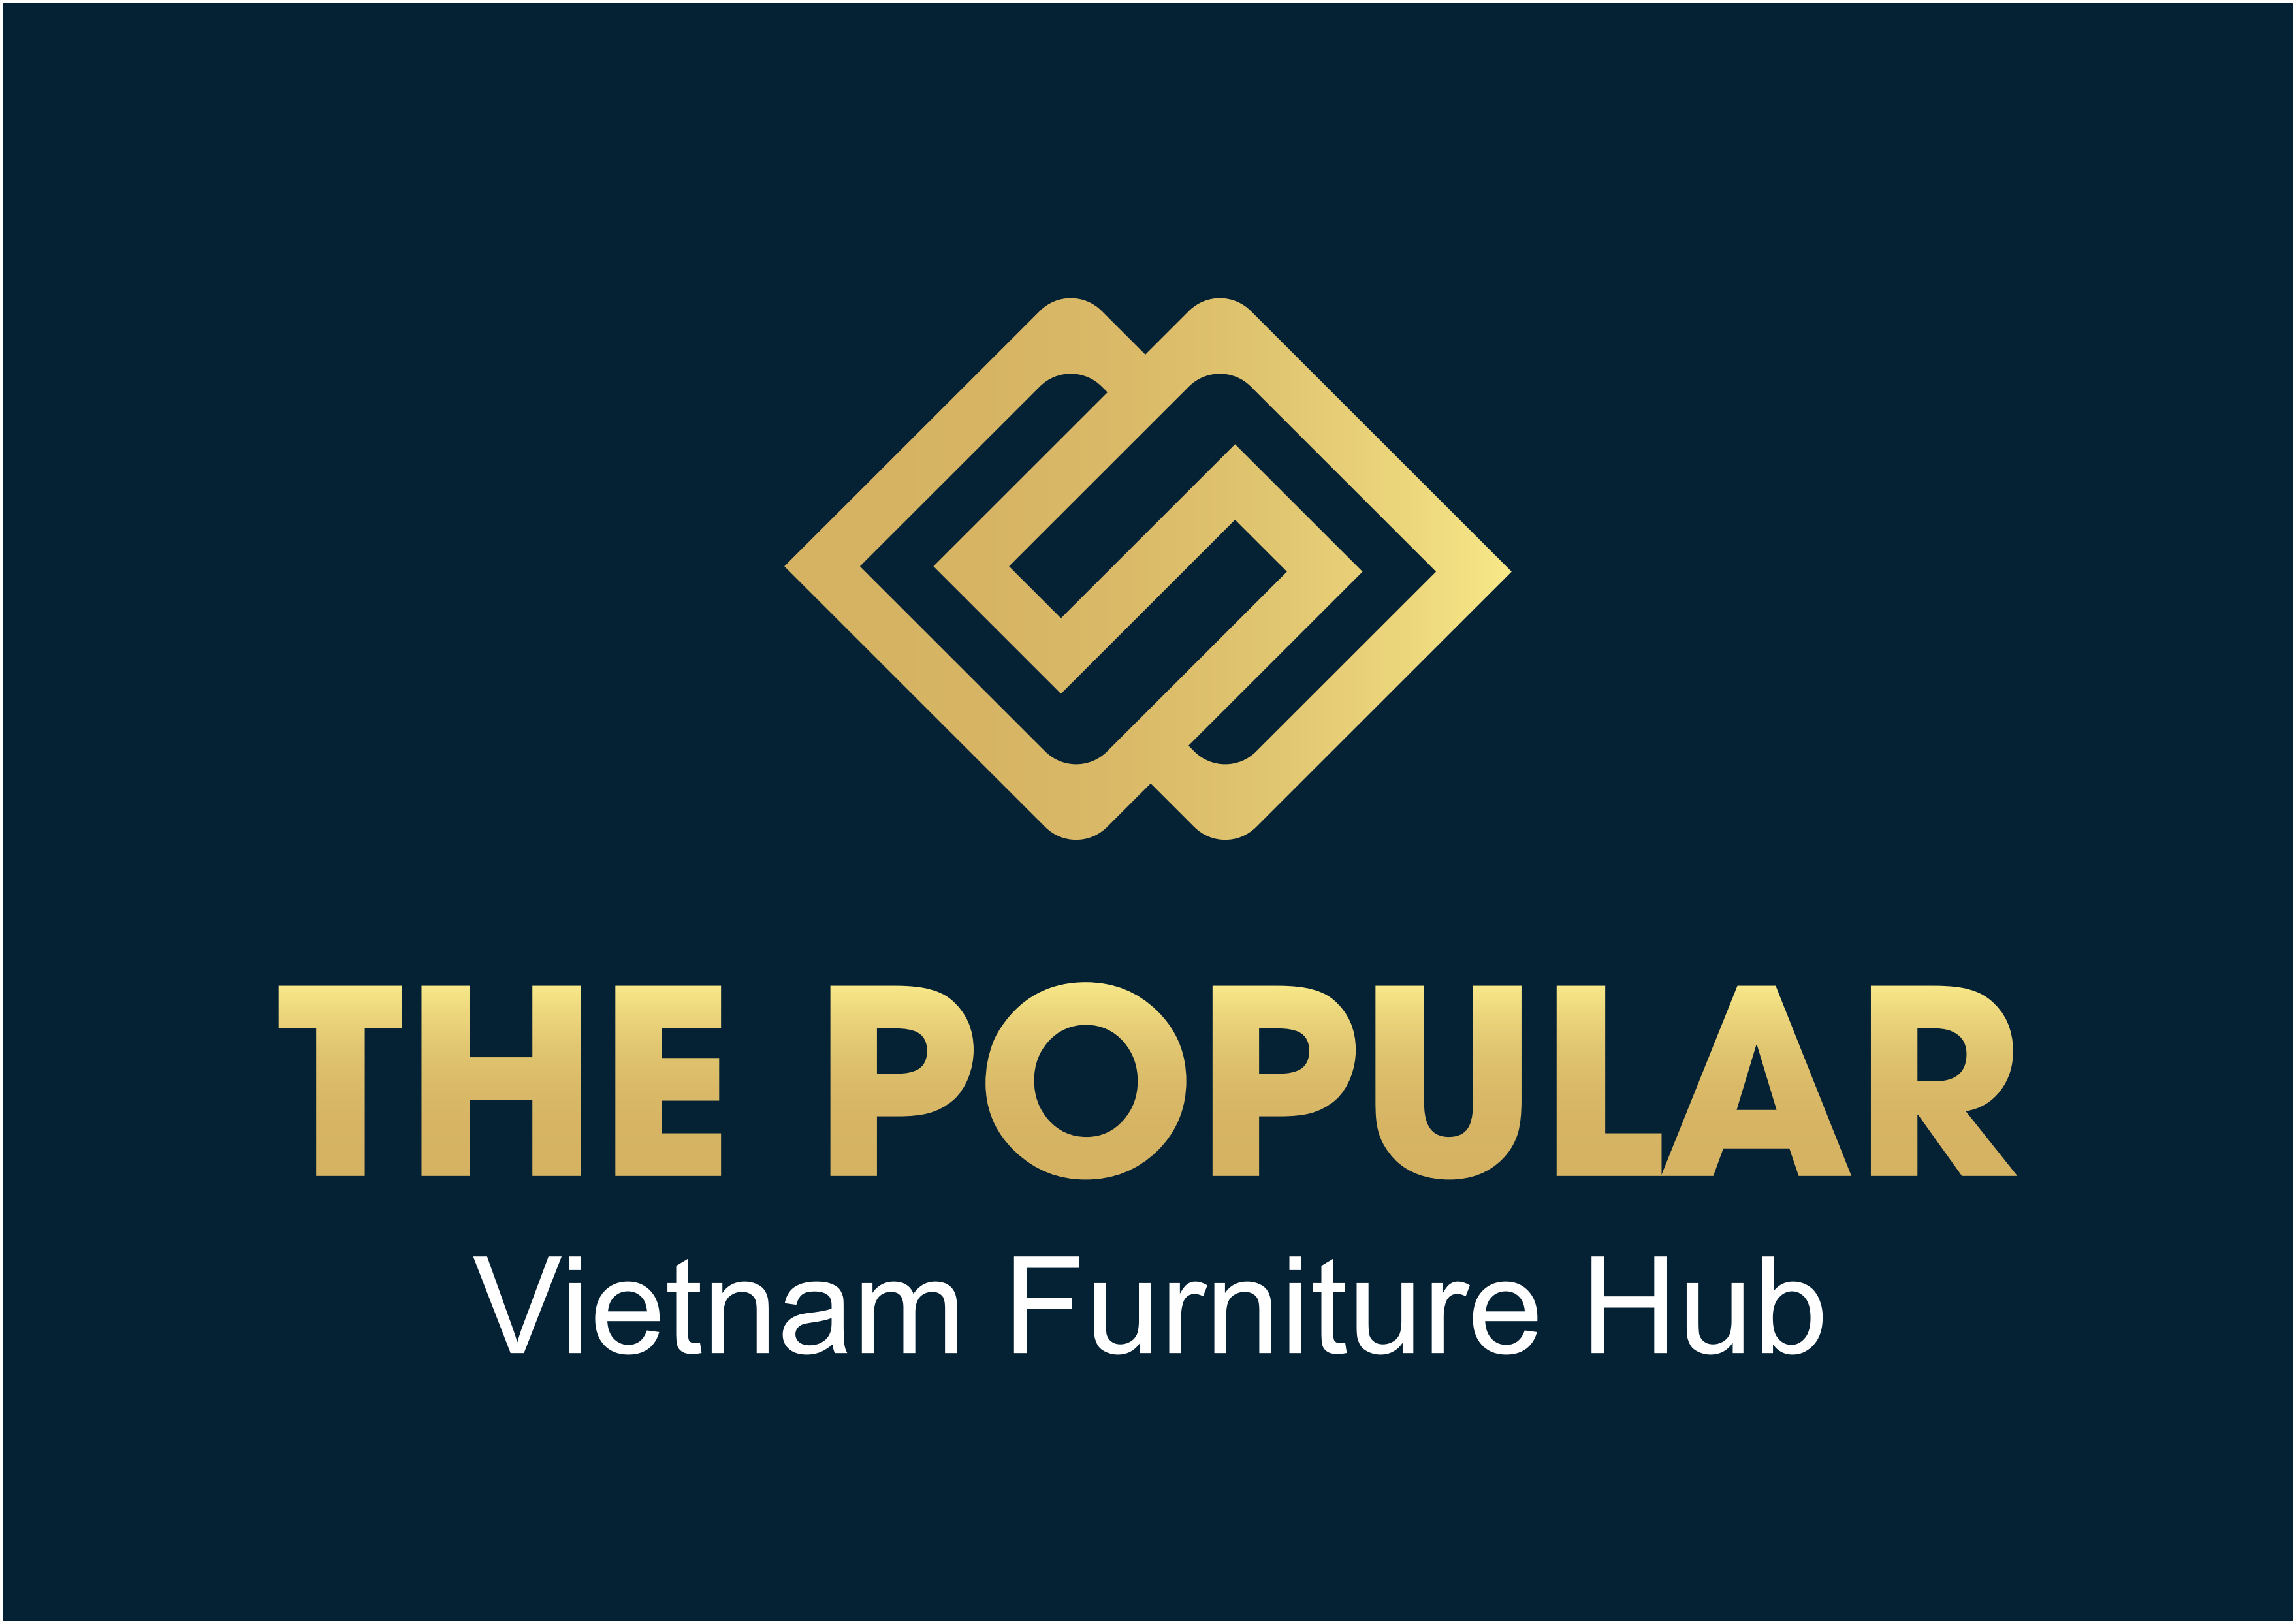 THE POPULAR - Vietnam Furniture Hub